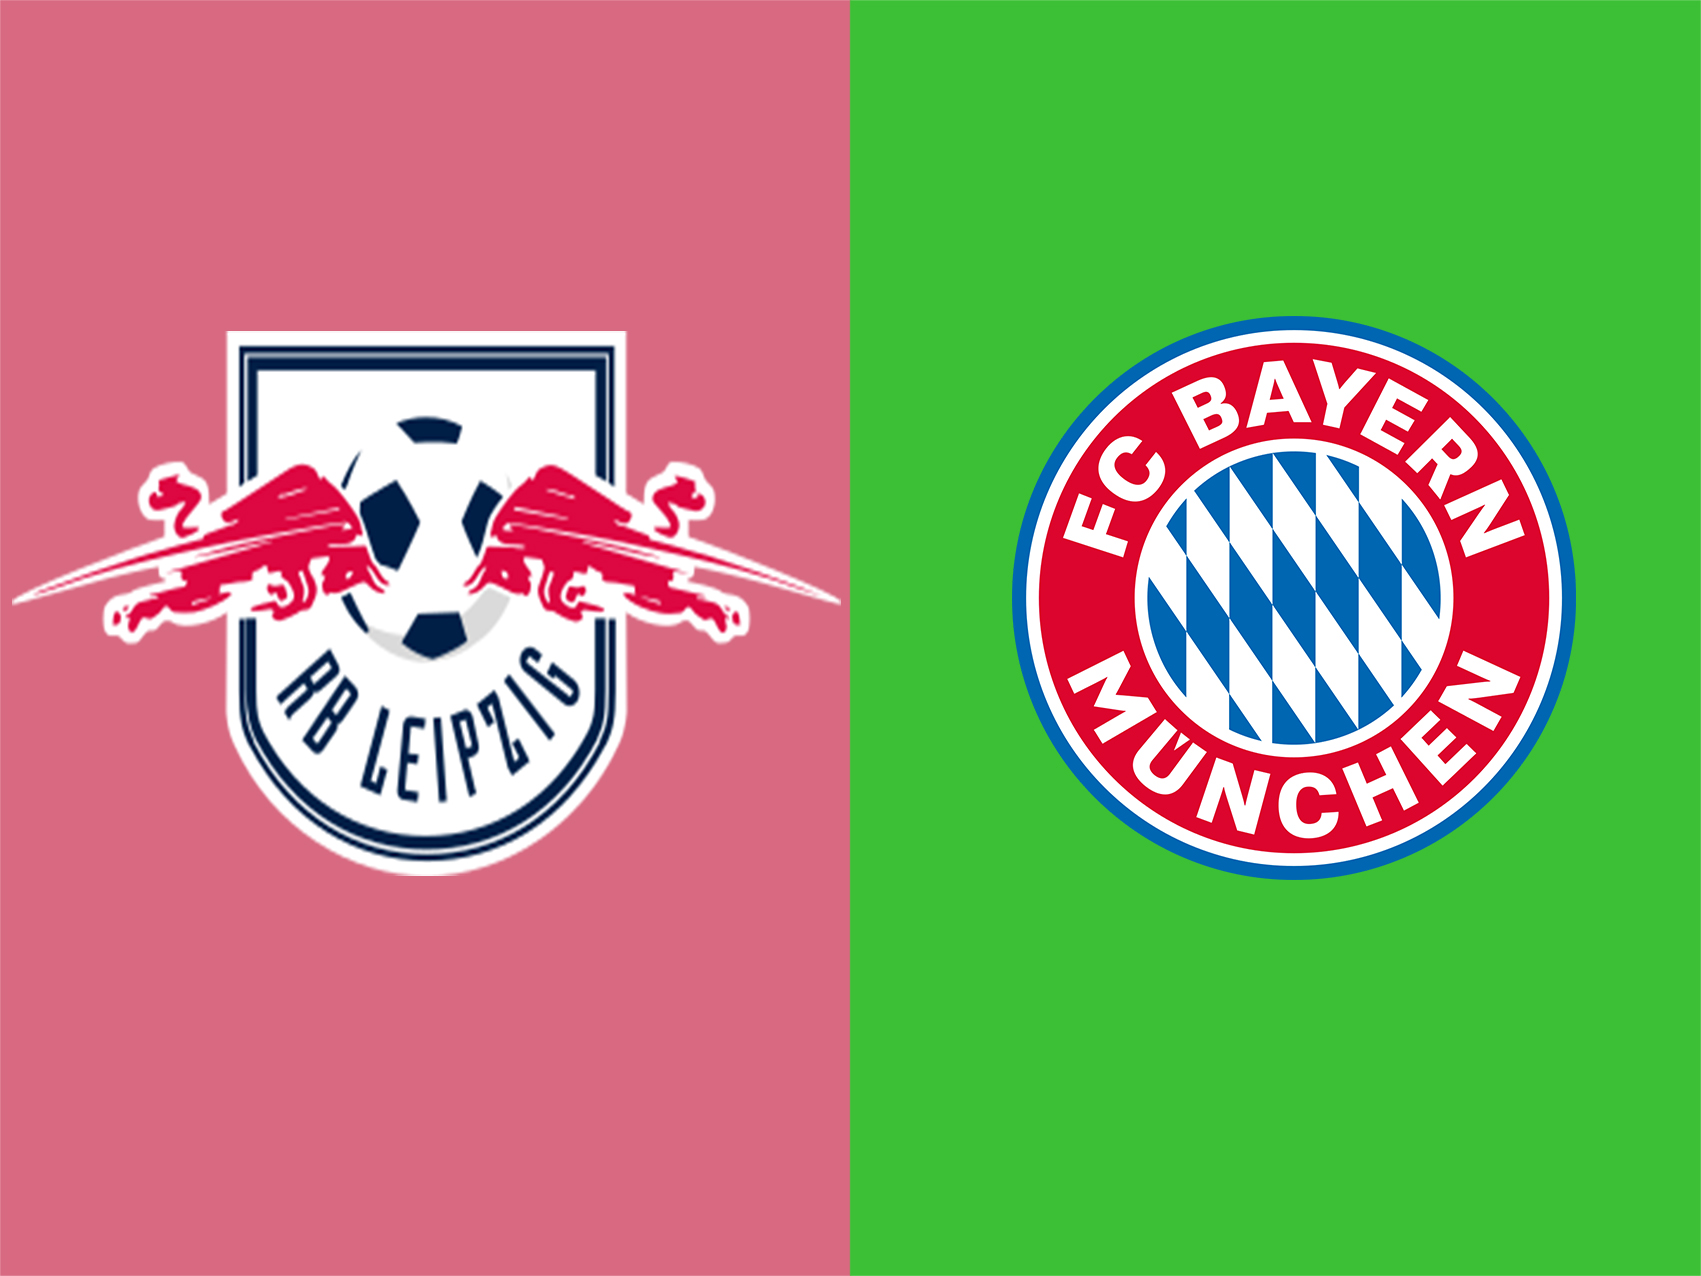 soi-keo-ca-cuoc-bong-da-ngay-14-9-RB Leipzig-vs-Bayern Munich-do-it-thang-do-nhieu-b9